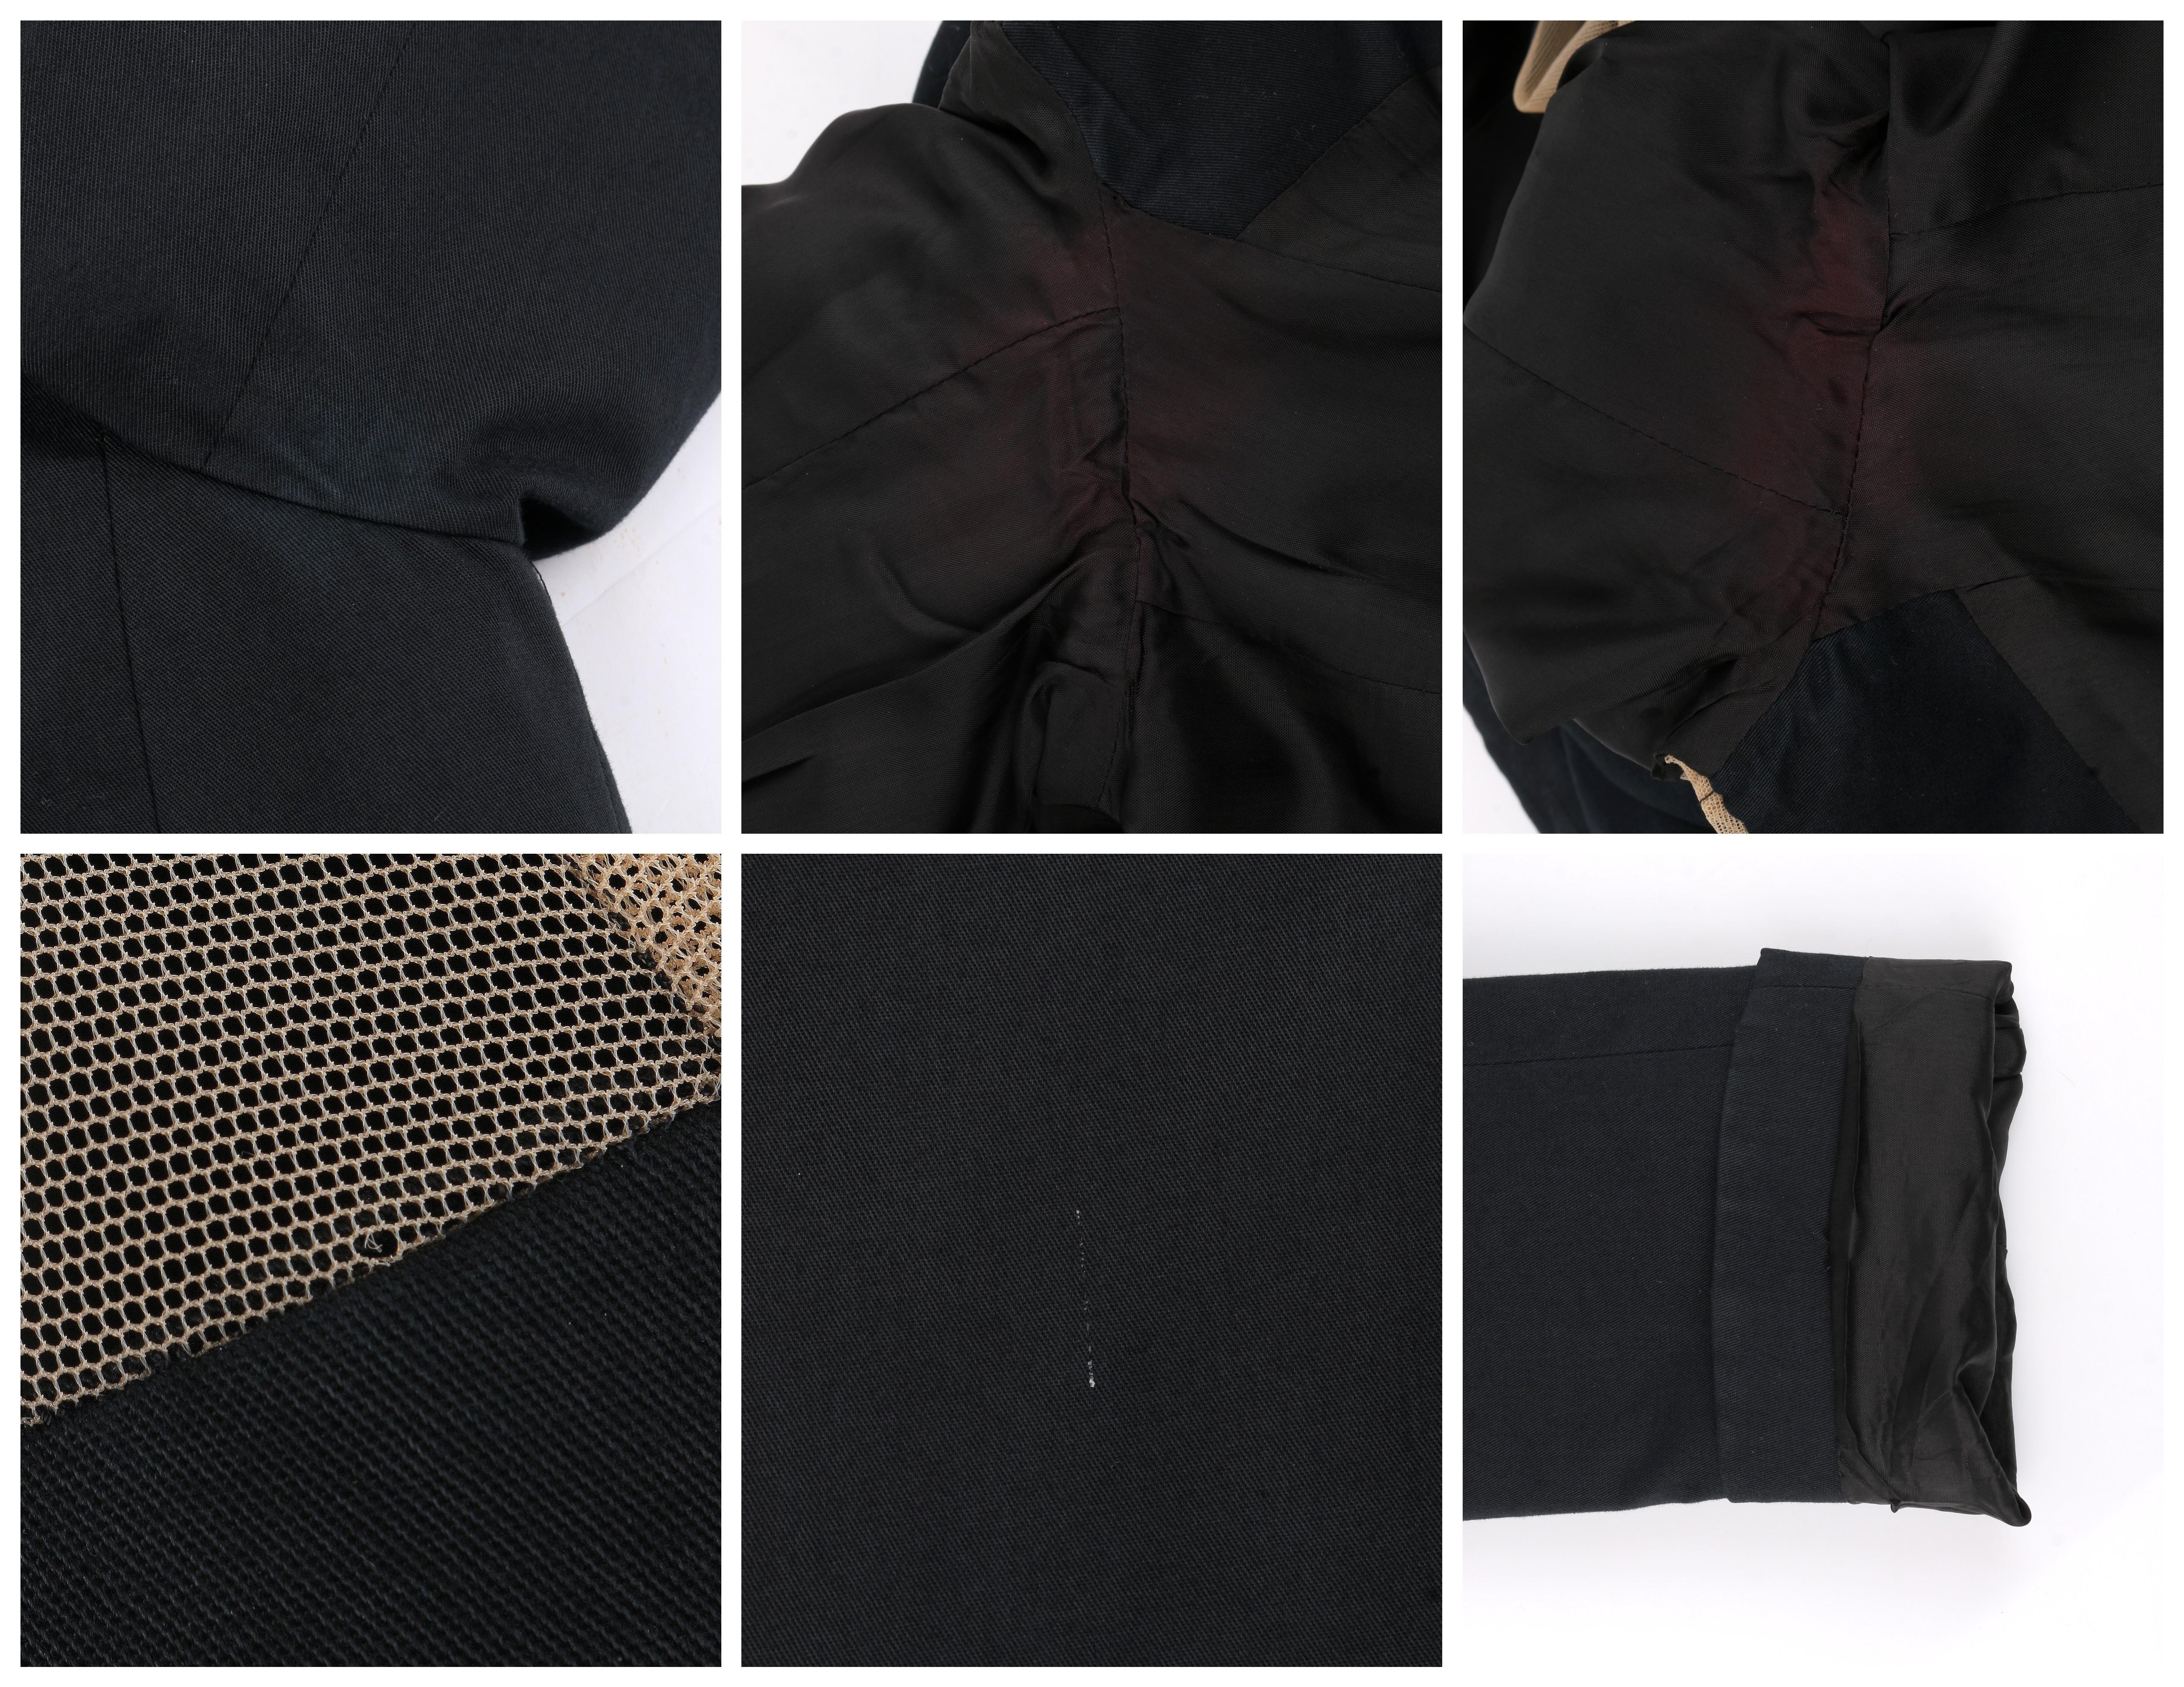 ALEXANDER McQUEEN S/S 1998 “Golden Shower” Black Mesh Stripe Blazer Mini Dress 5